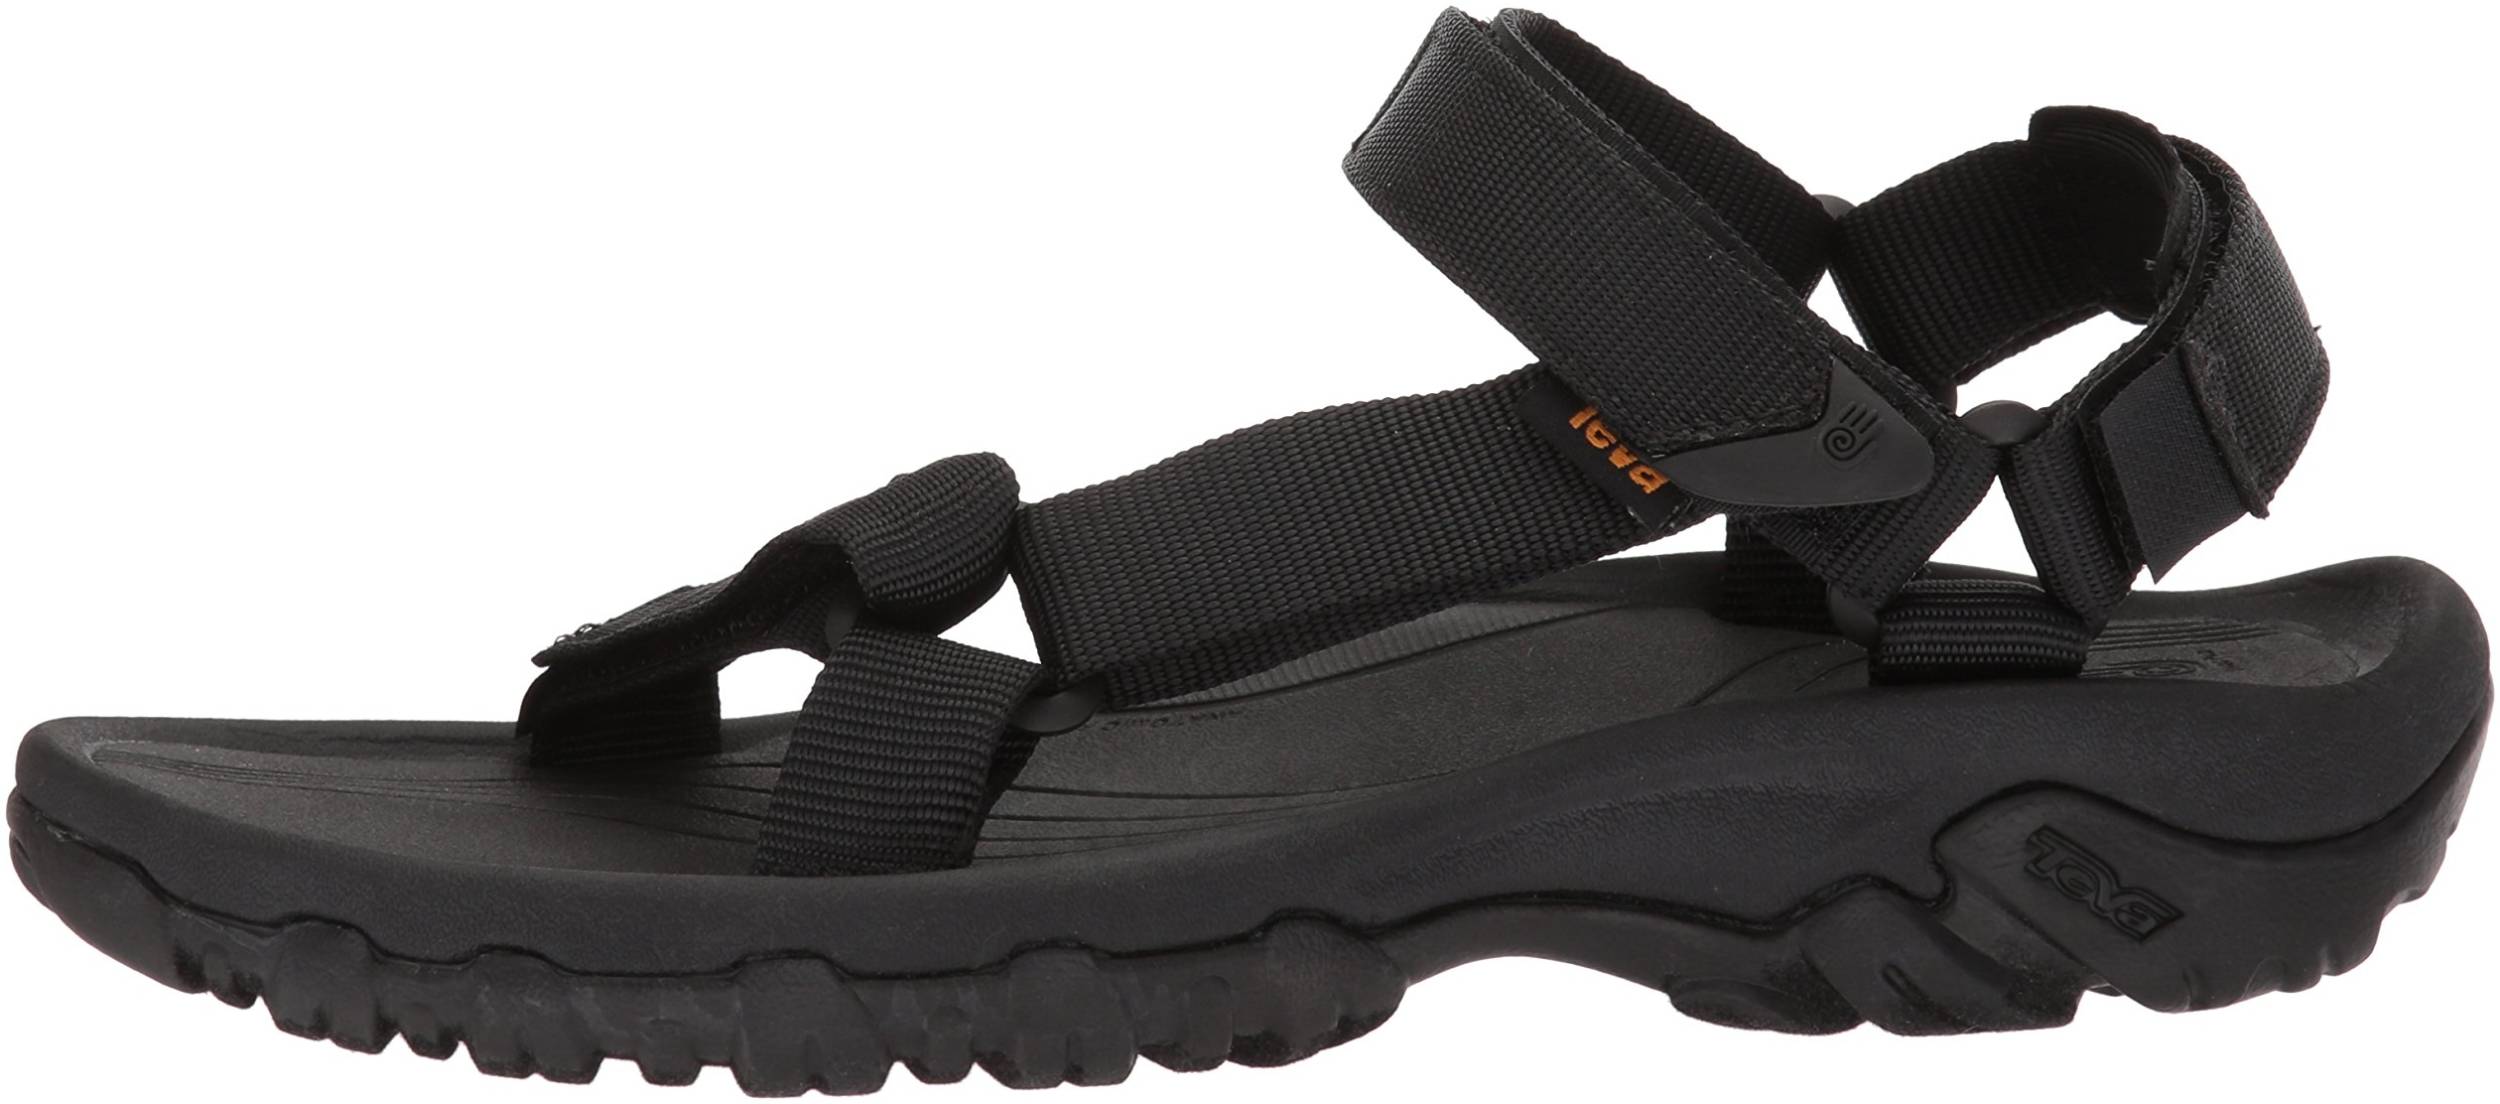 Teva Original Universal Mens Walking Hiking Sandals Water Shoes Multi Size 8-13 